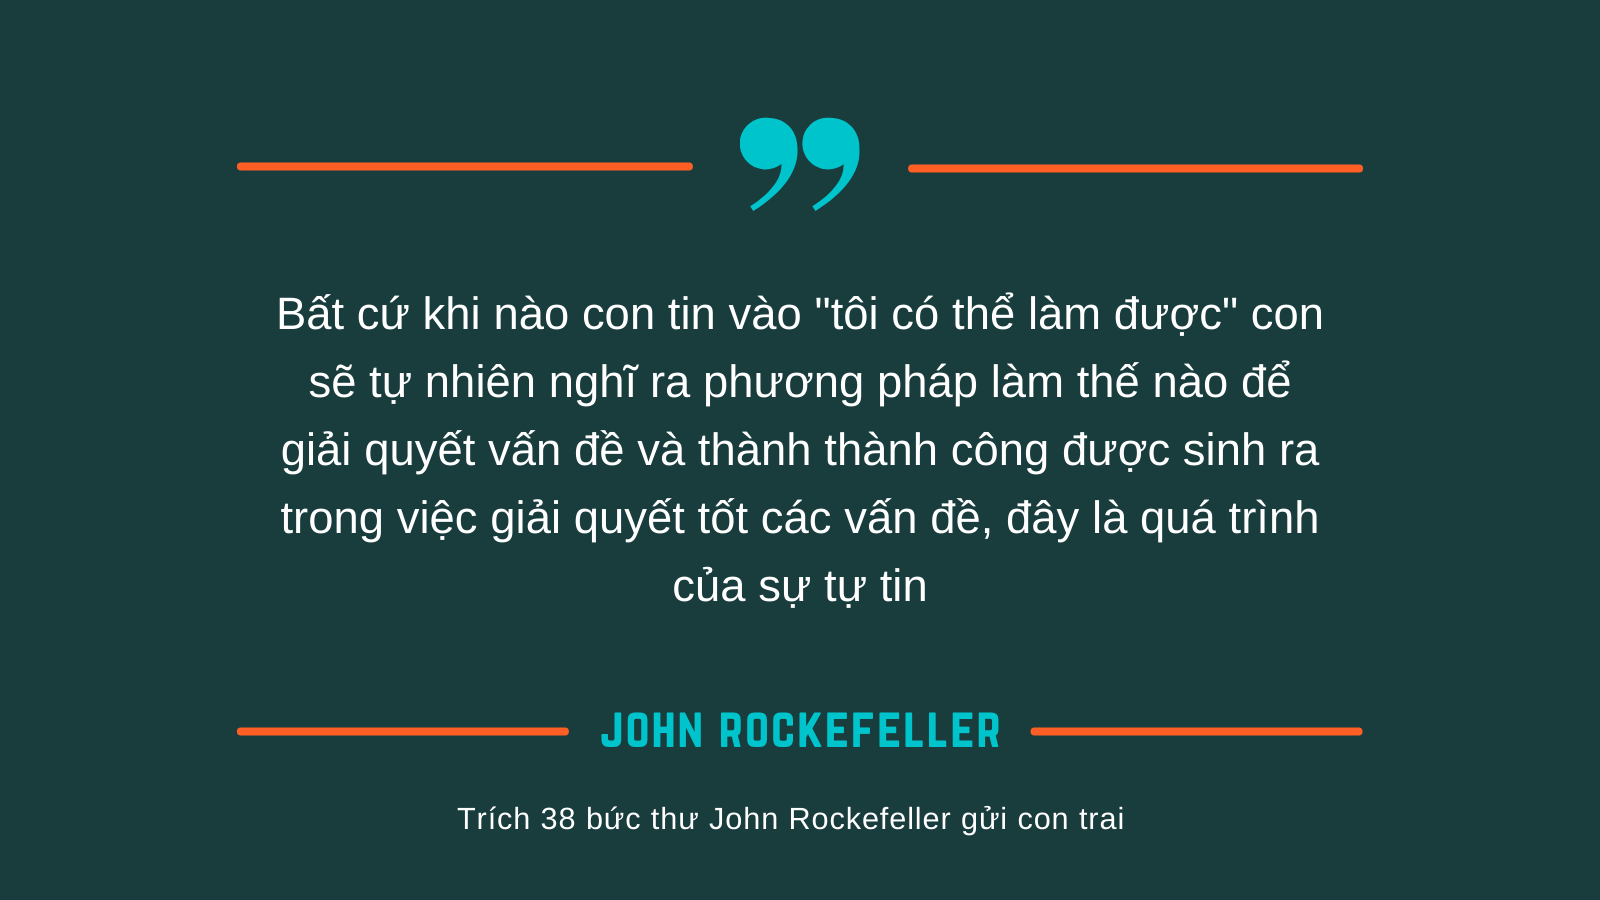 38 buc thu gui con trai cua John Rockefeller 1